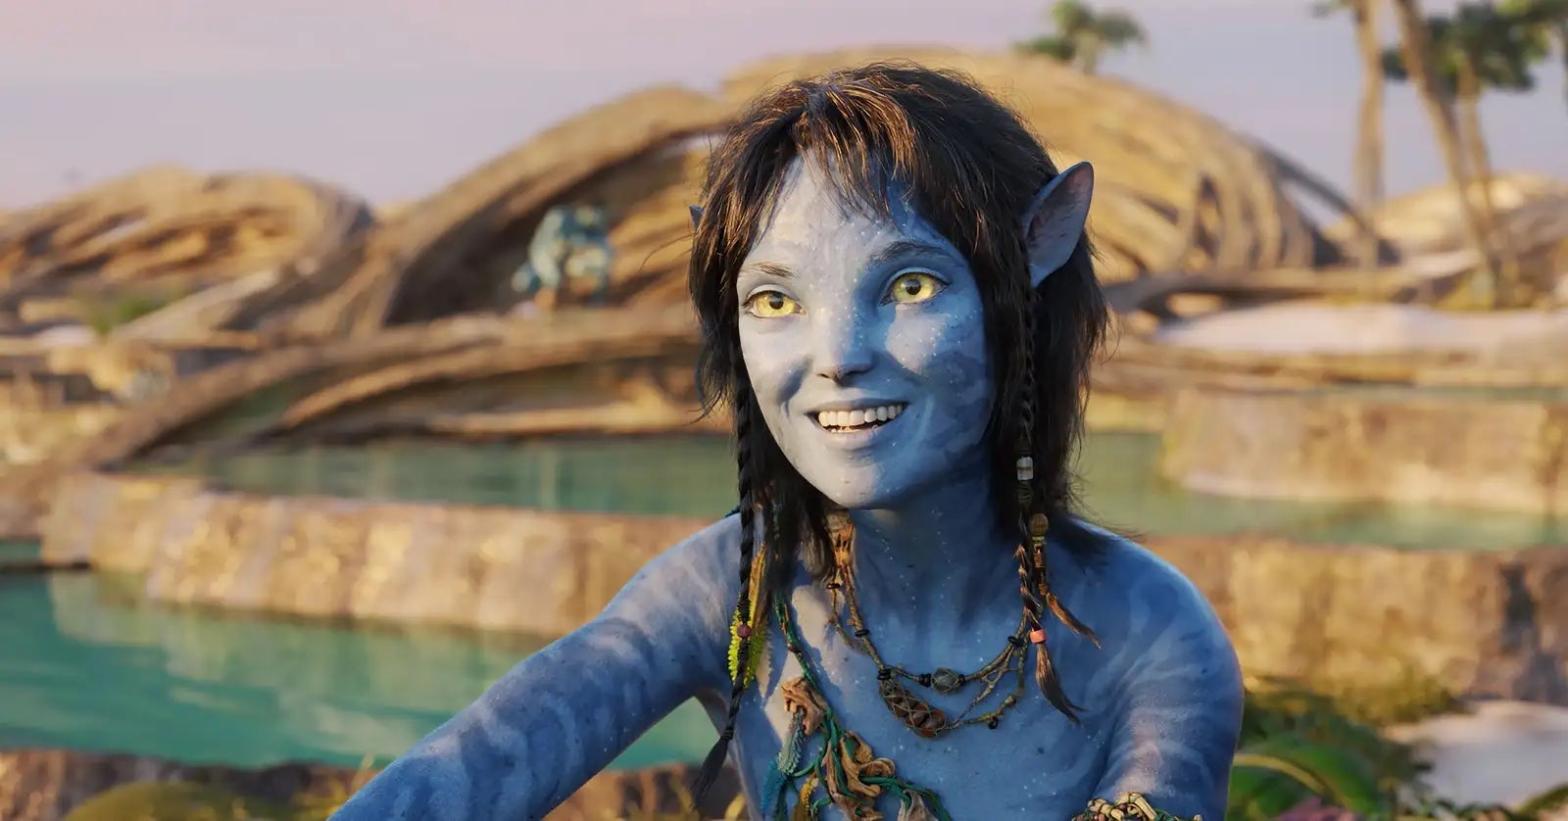 Sigourney Weaver, star of Aliens, plays teenager Kiri in Avatar: The Way of Water. (Image: Disney)